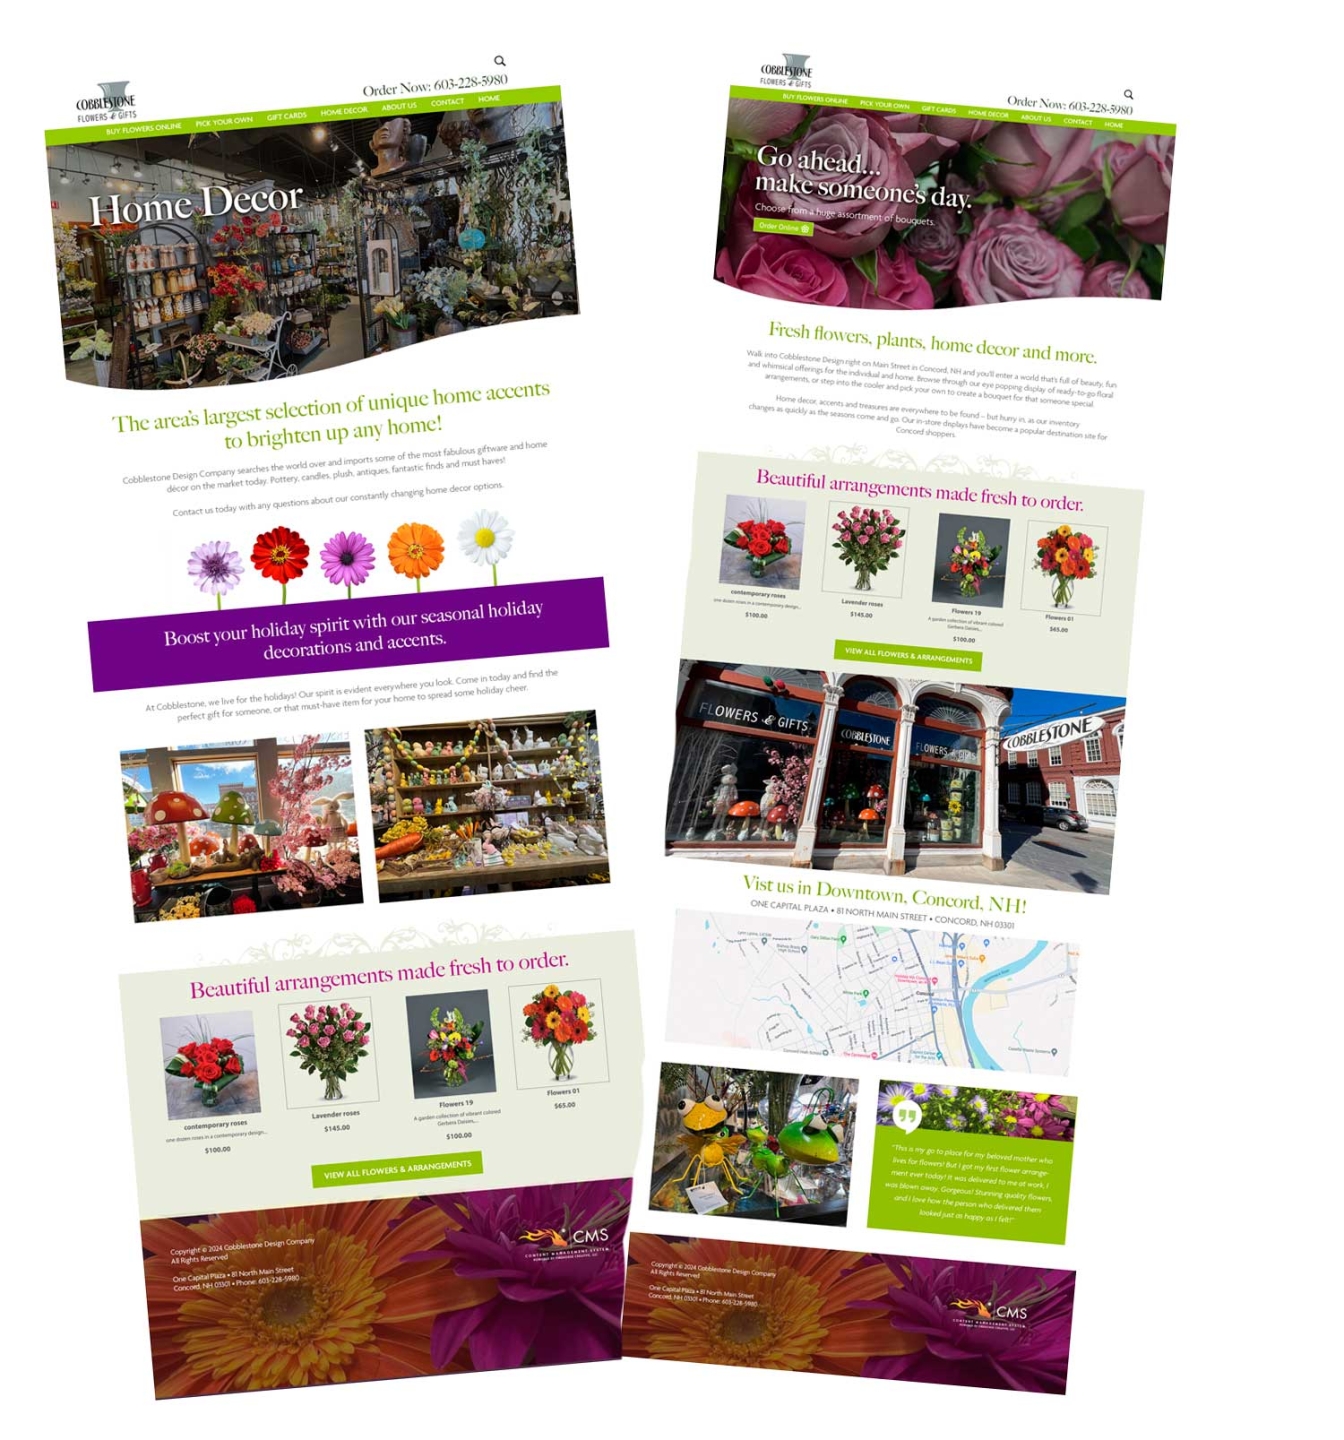 Firehorse Creative launches the new Cobblestone Florist website